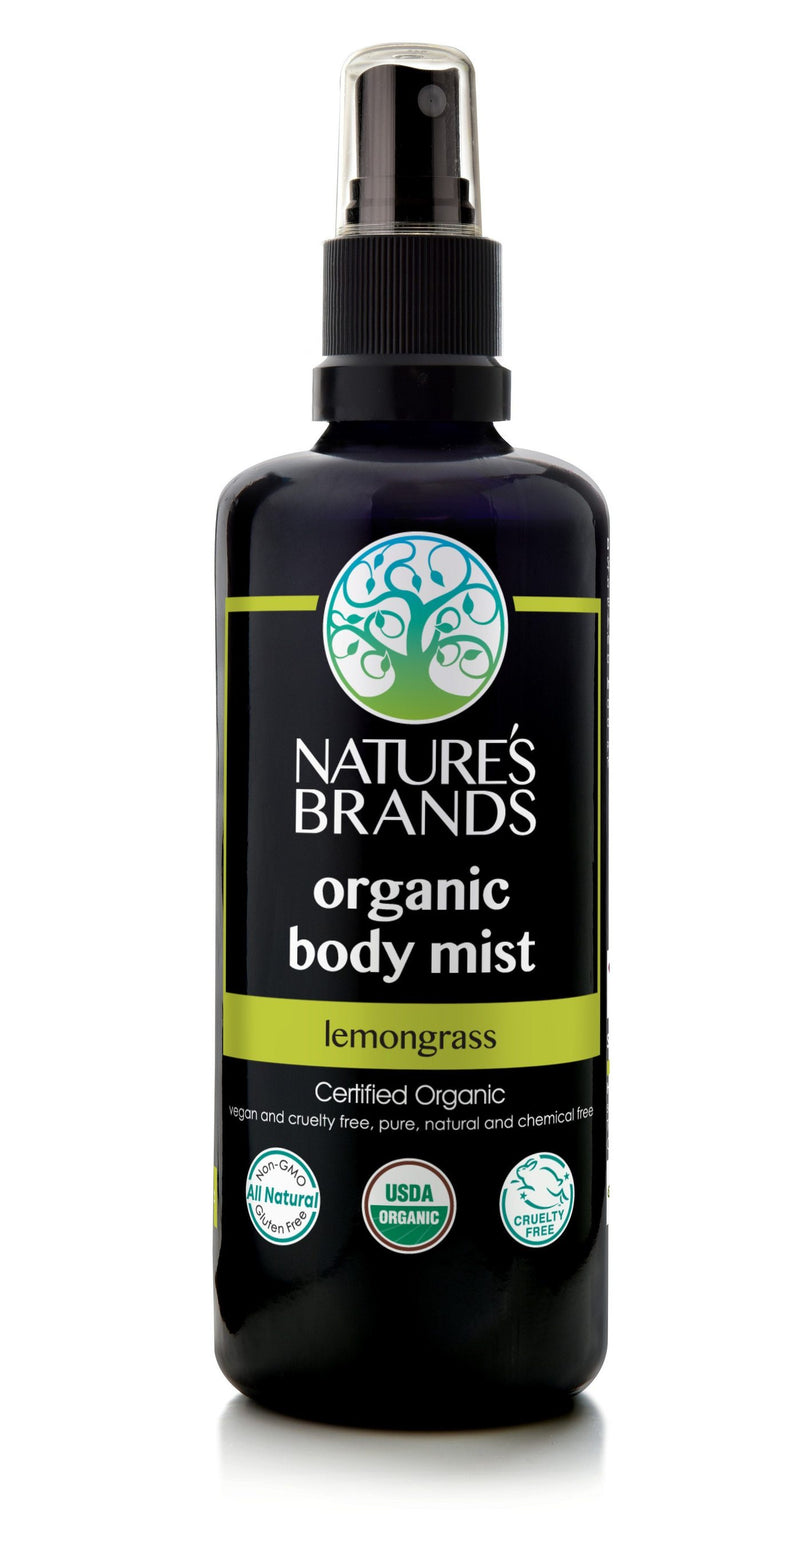 Herbal Choice Mari Organic Body Mist - Herbal Choice Mari Organic Body Mist - Herbal Choice Mari Organic Body Mist